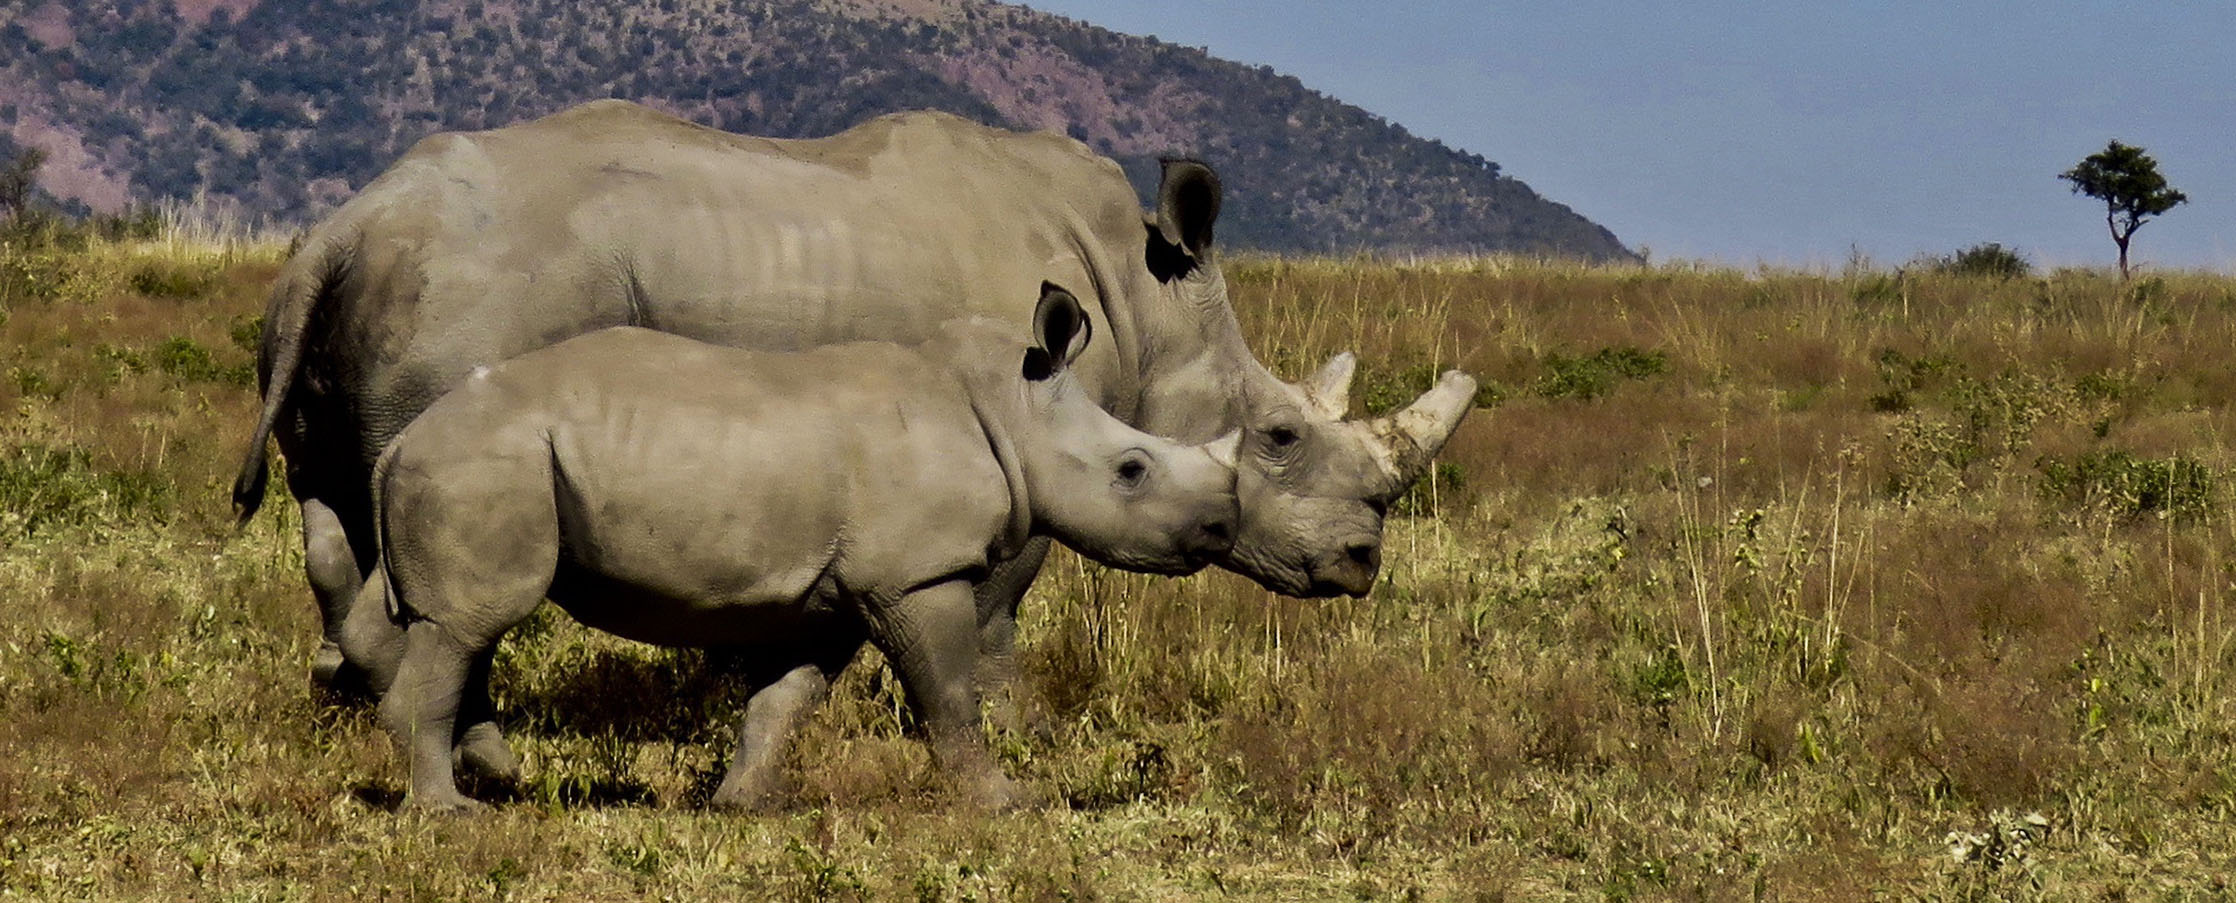 canada ban rhino